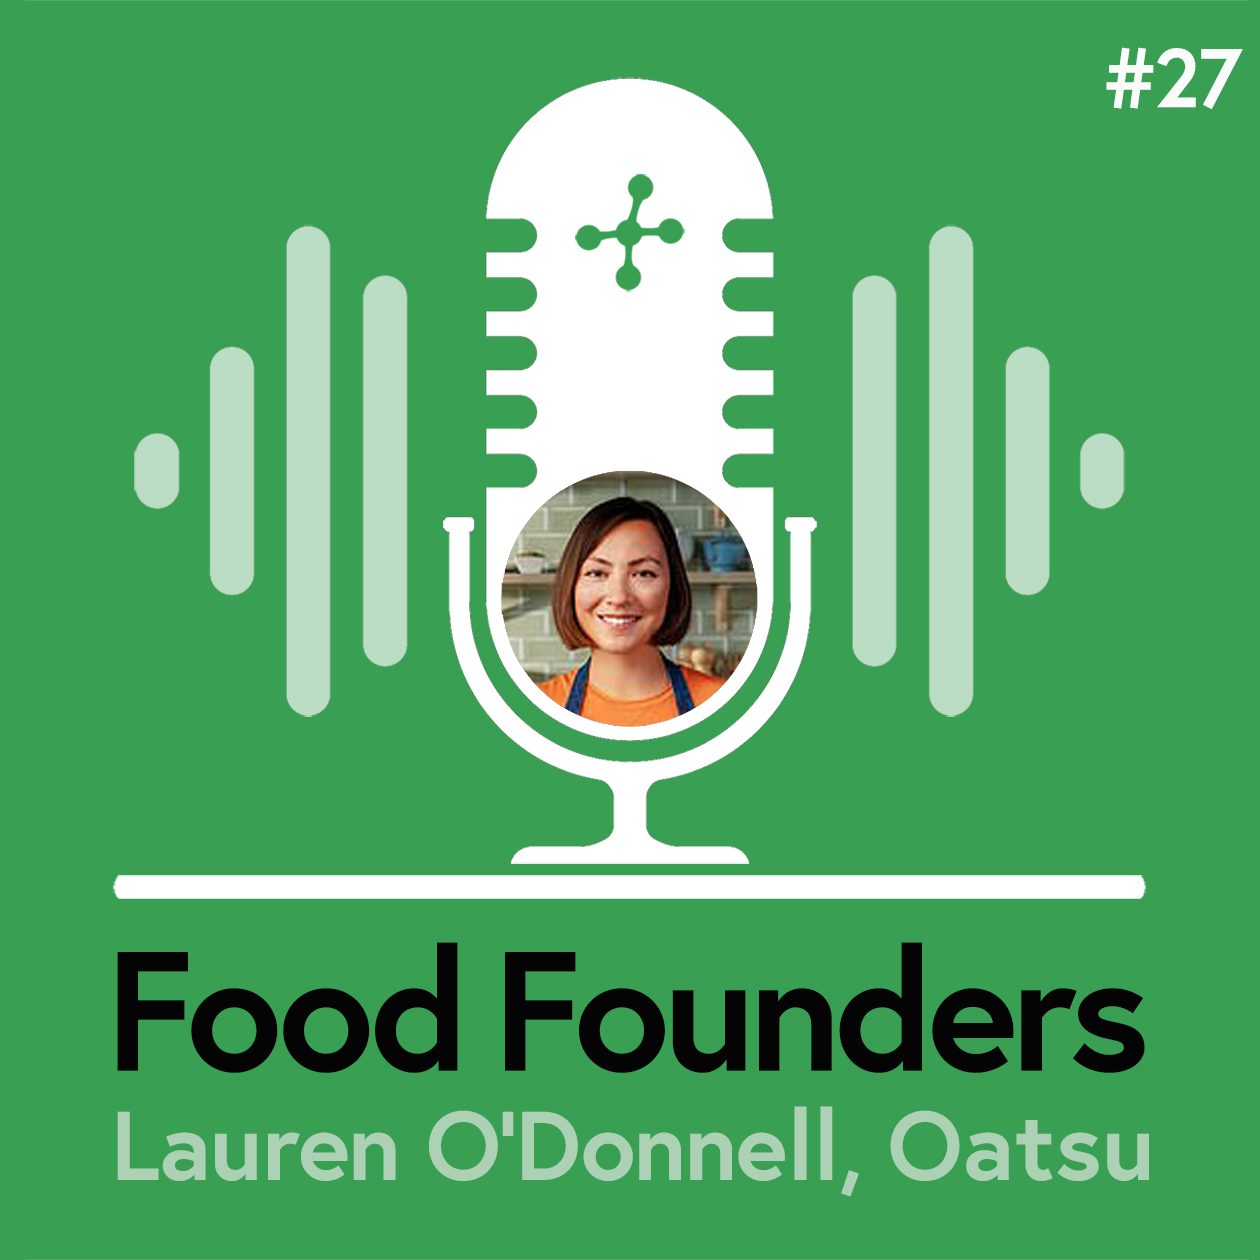 Oatsu: From home kitchen to Holland & Barrett